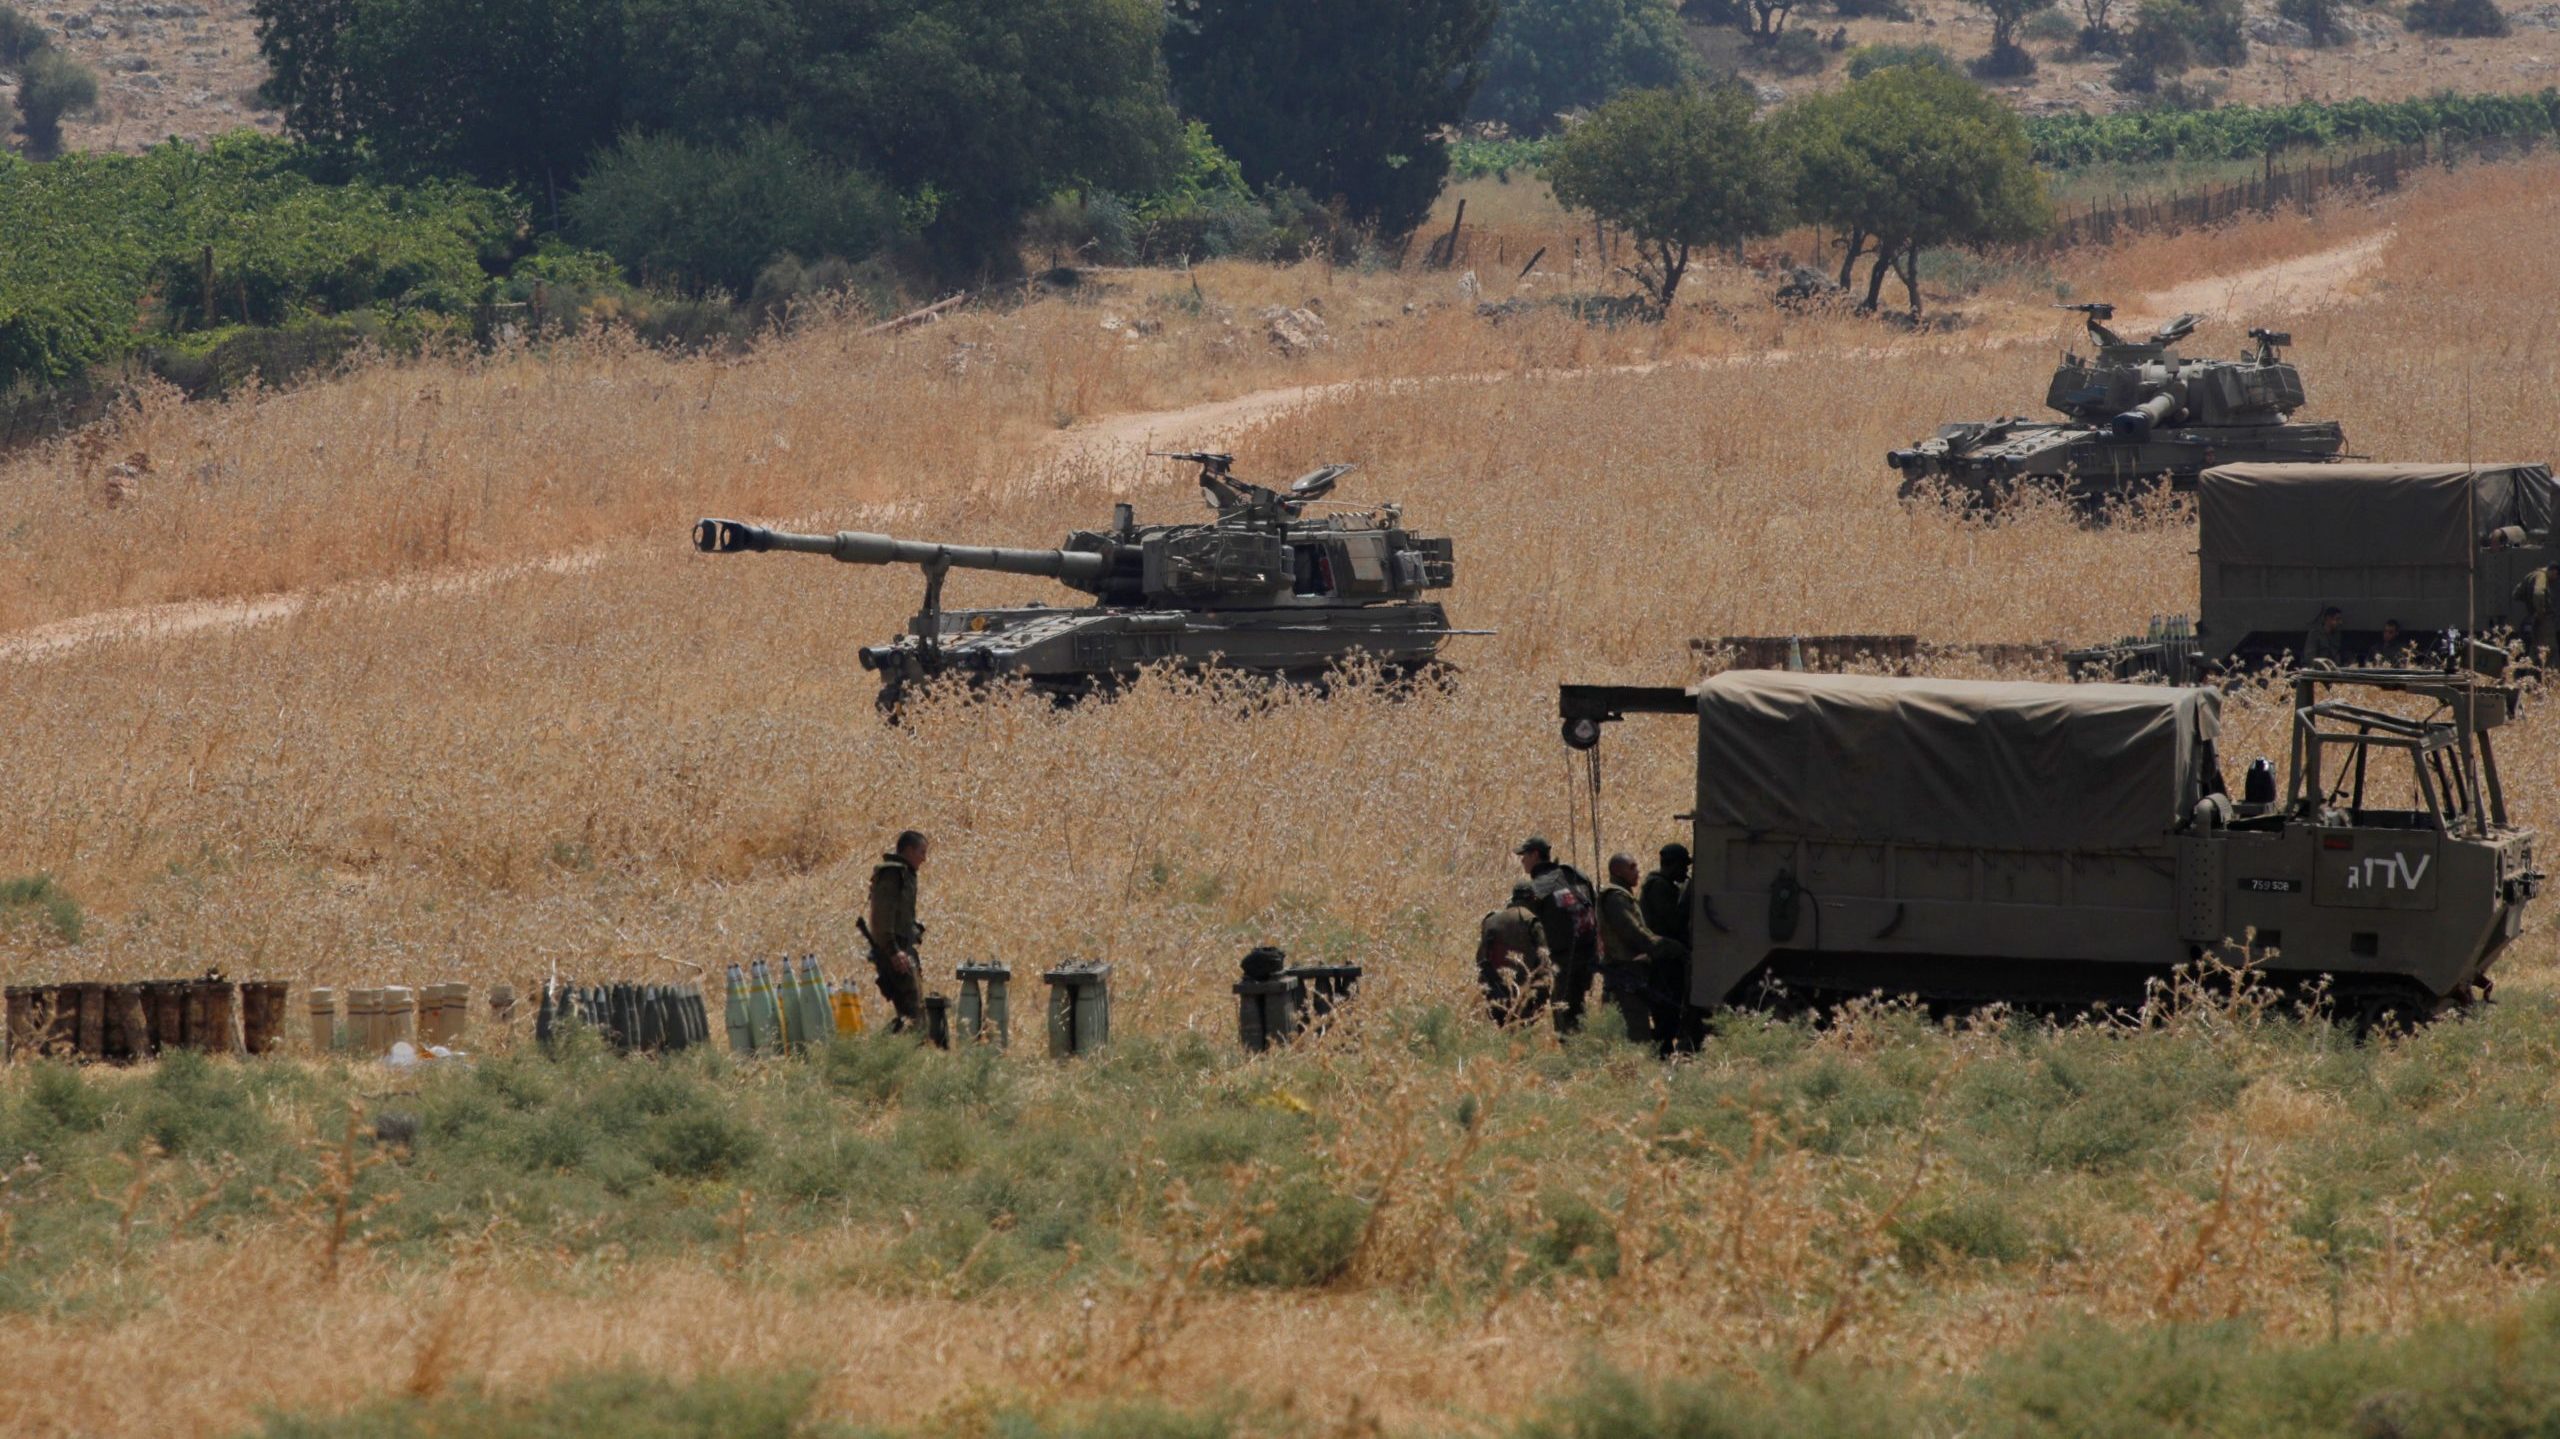 Skirmishes, Gunfire Reported at Israel-Lebanon Border